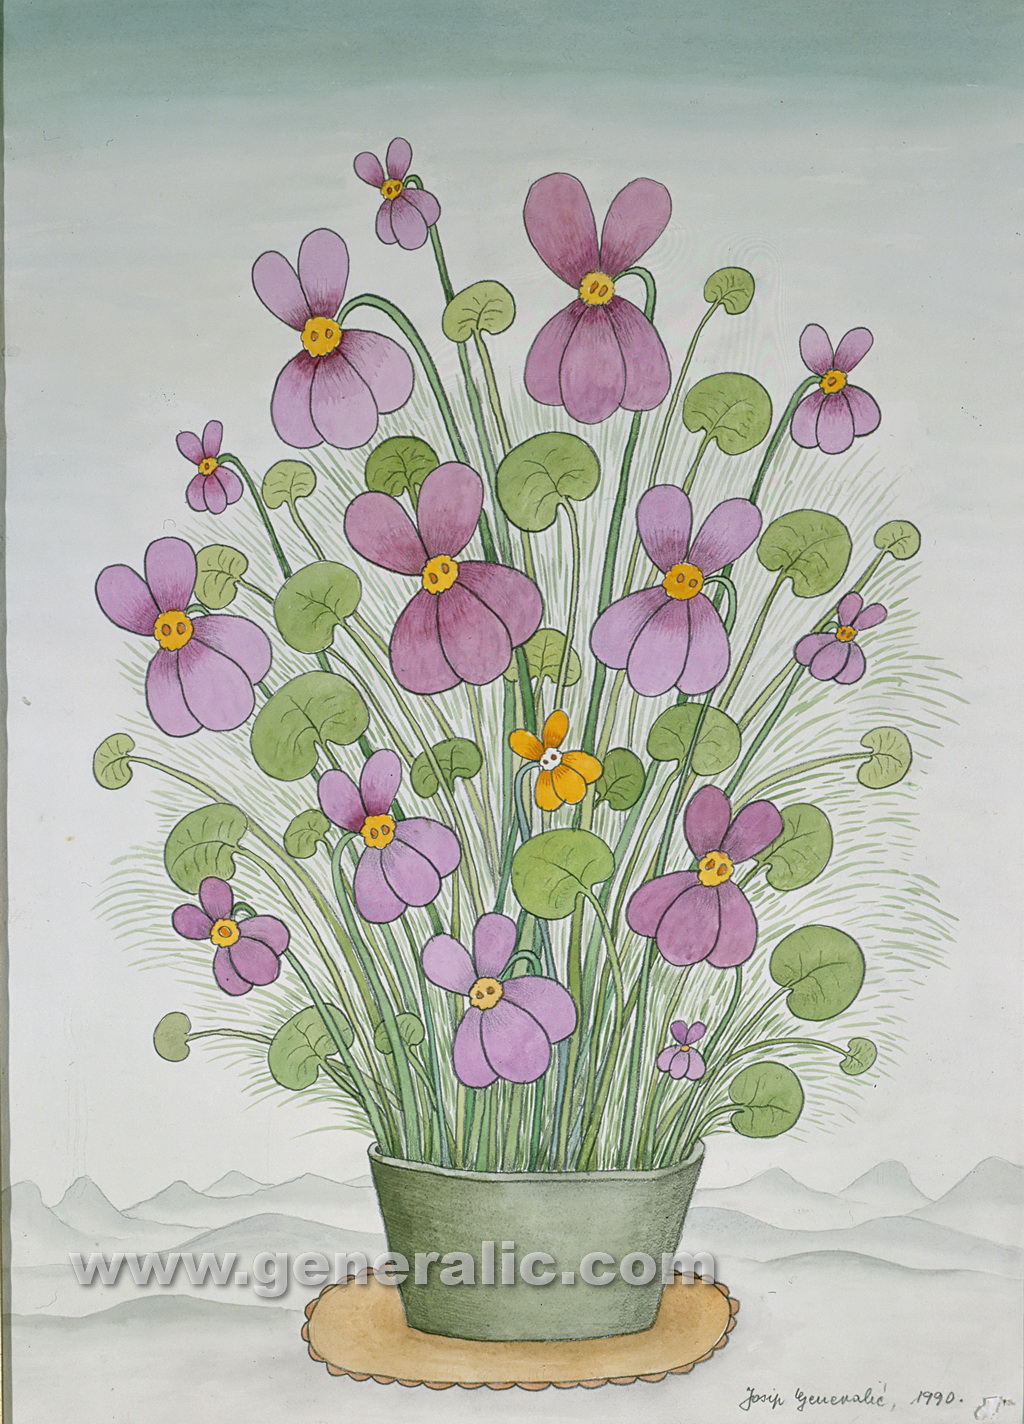 Josip Generalic, 1990, Violets, watercolour